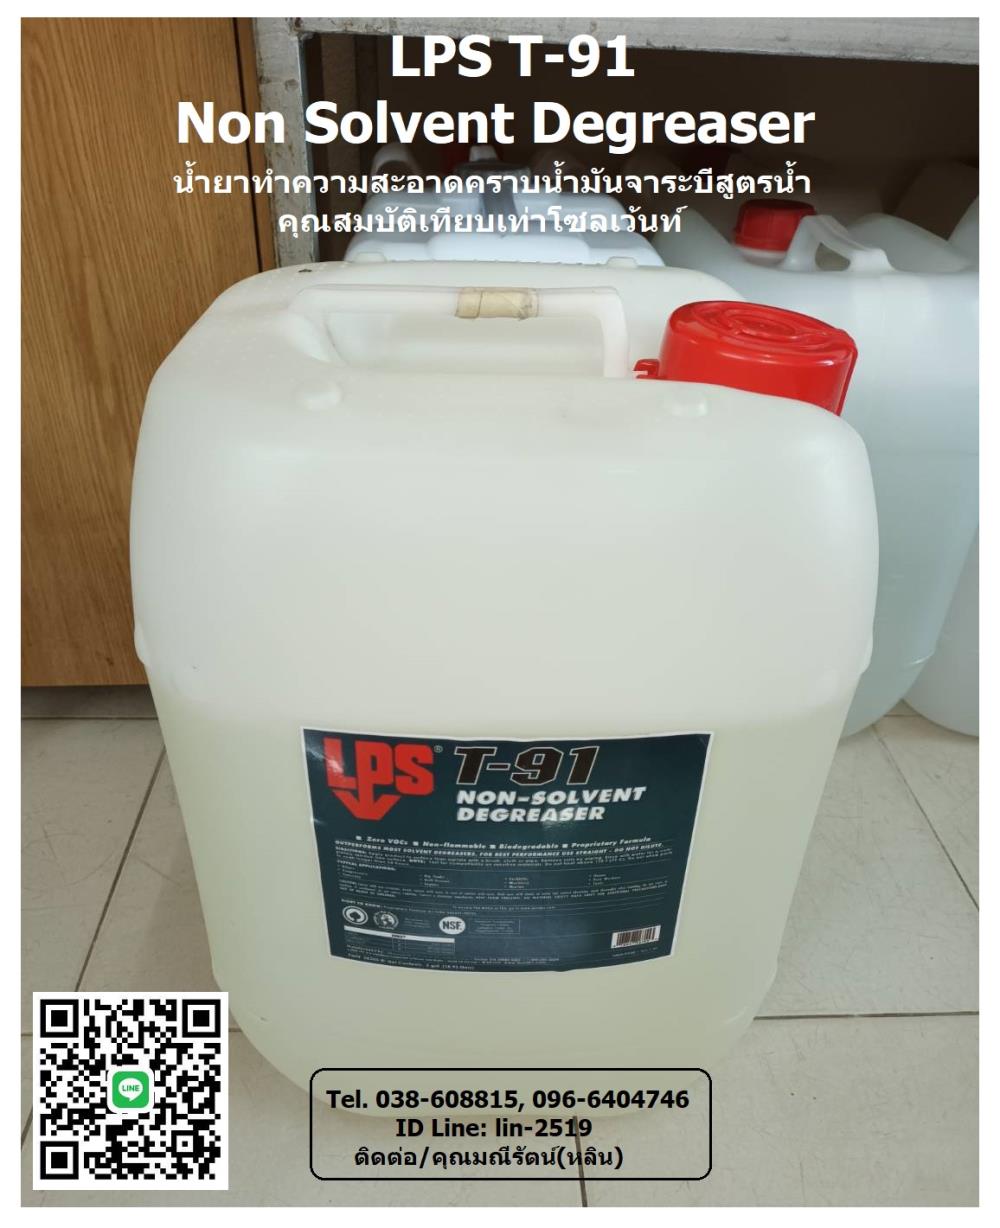 LPS T-91 Non-Solvent Degreaser น้ำยาทำความสะอาดคราบน้ำมัน จาระบีเอนกประสงค์ (สูตรน้ำ) มีประสิทธิภาพเทียบเท่าโซเว้นท์ ย่อยสลายได้ตามธรรมชาติ